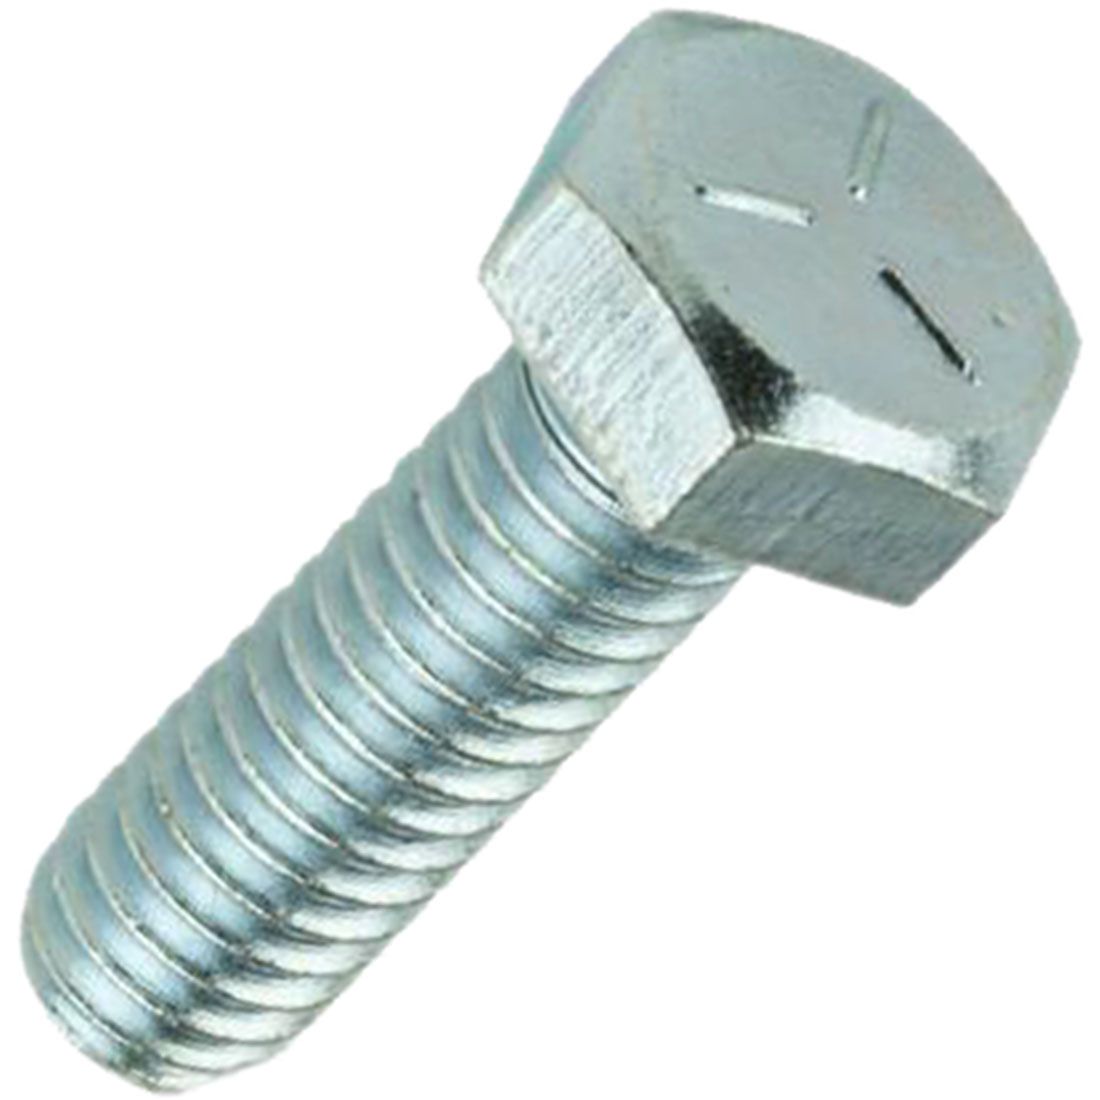 Pro Twist Concrete Screw Anchor Hex Washer Head 3/16 x 2-3/4" 100pc #HC32341C 